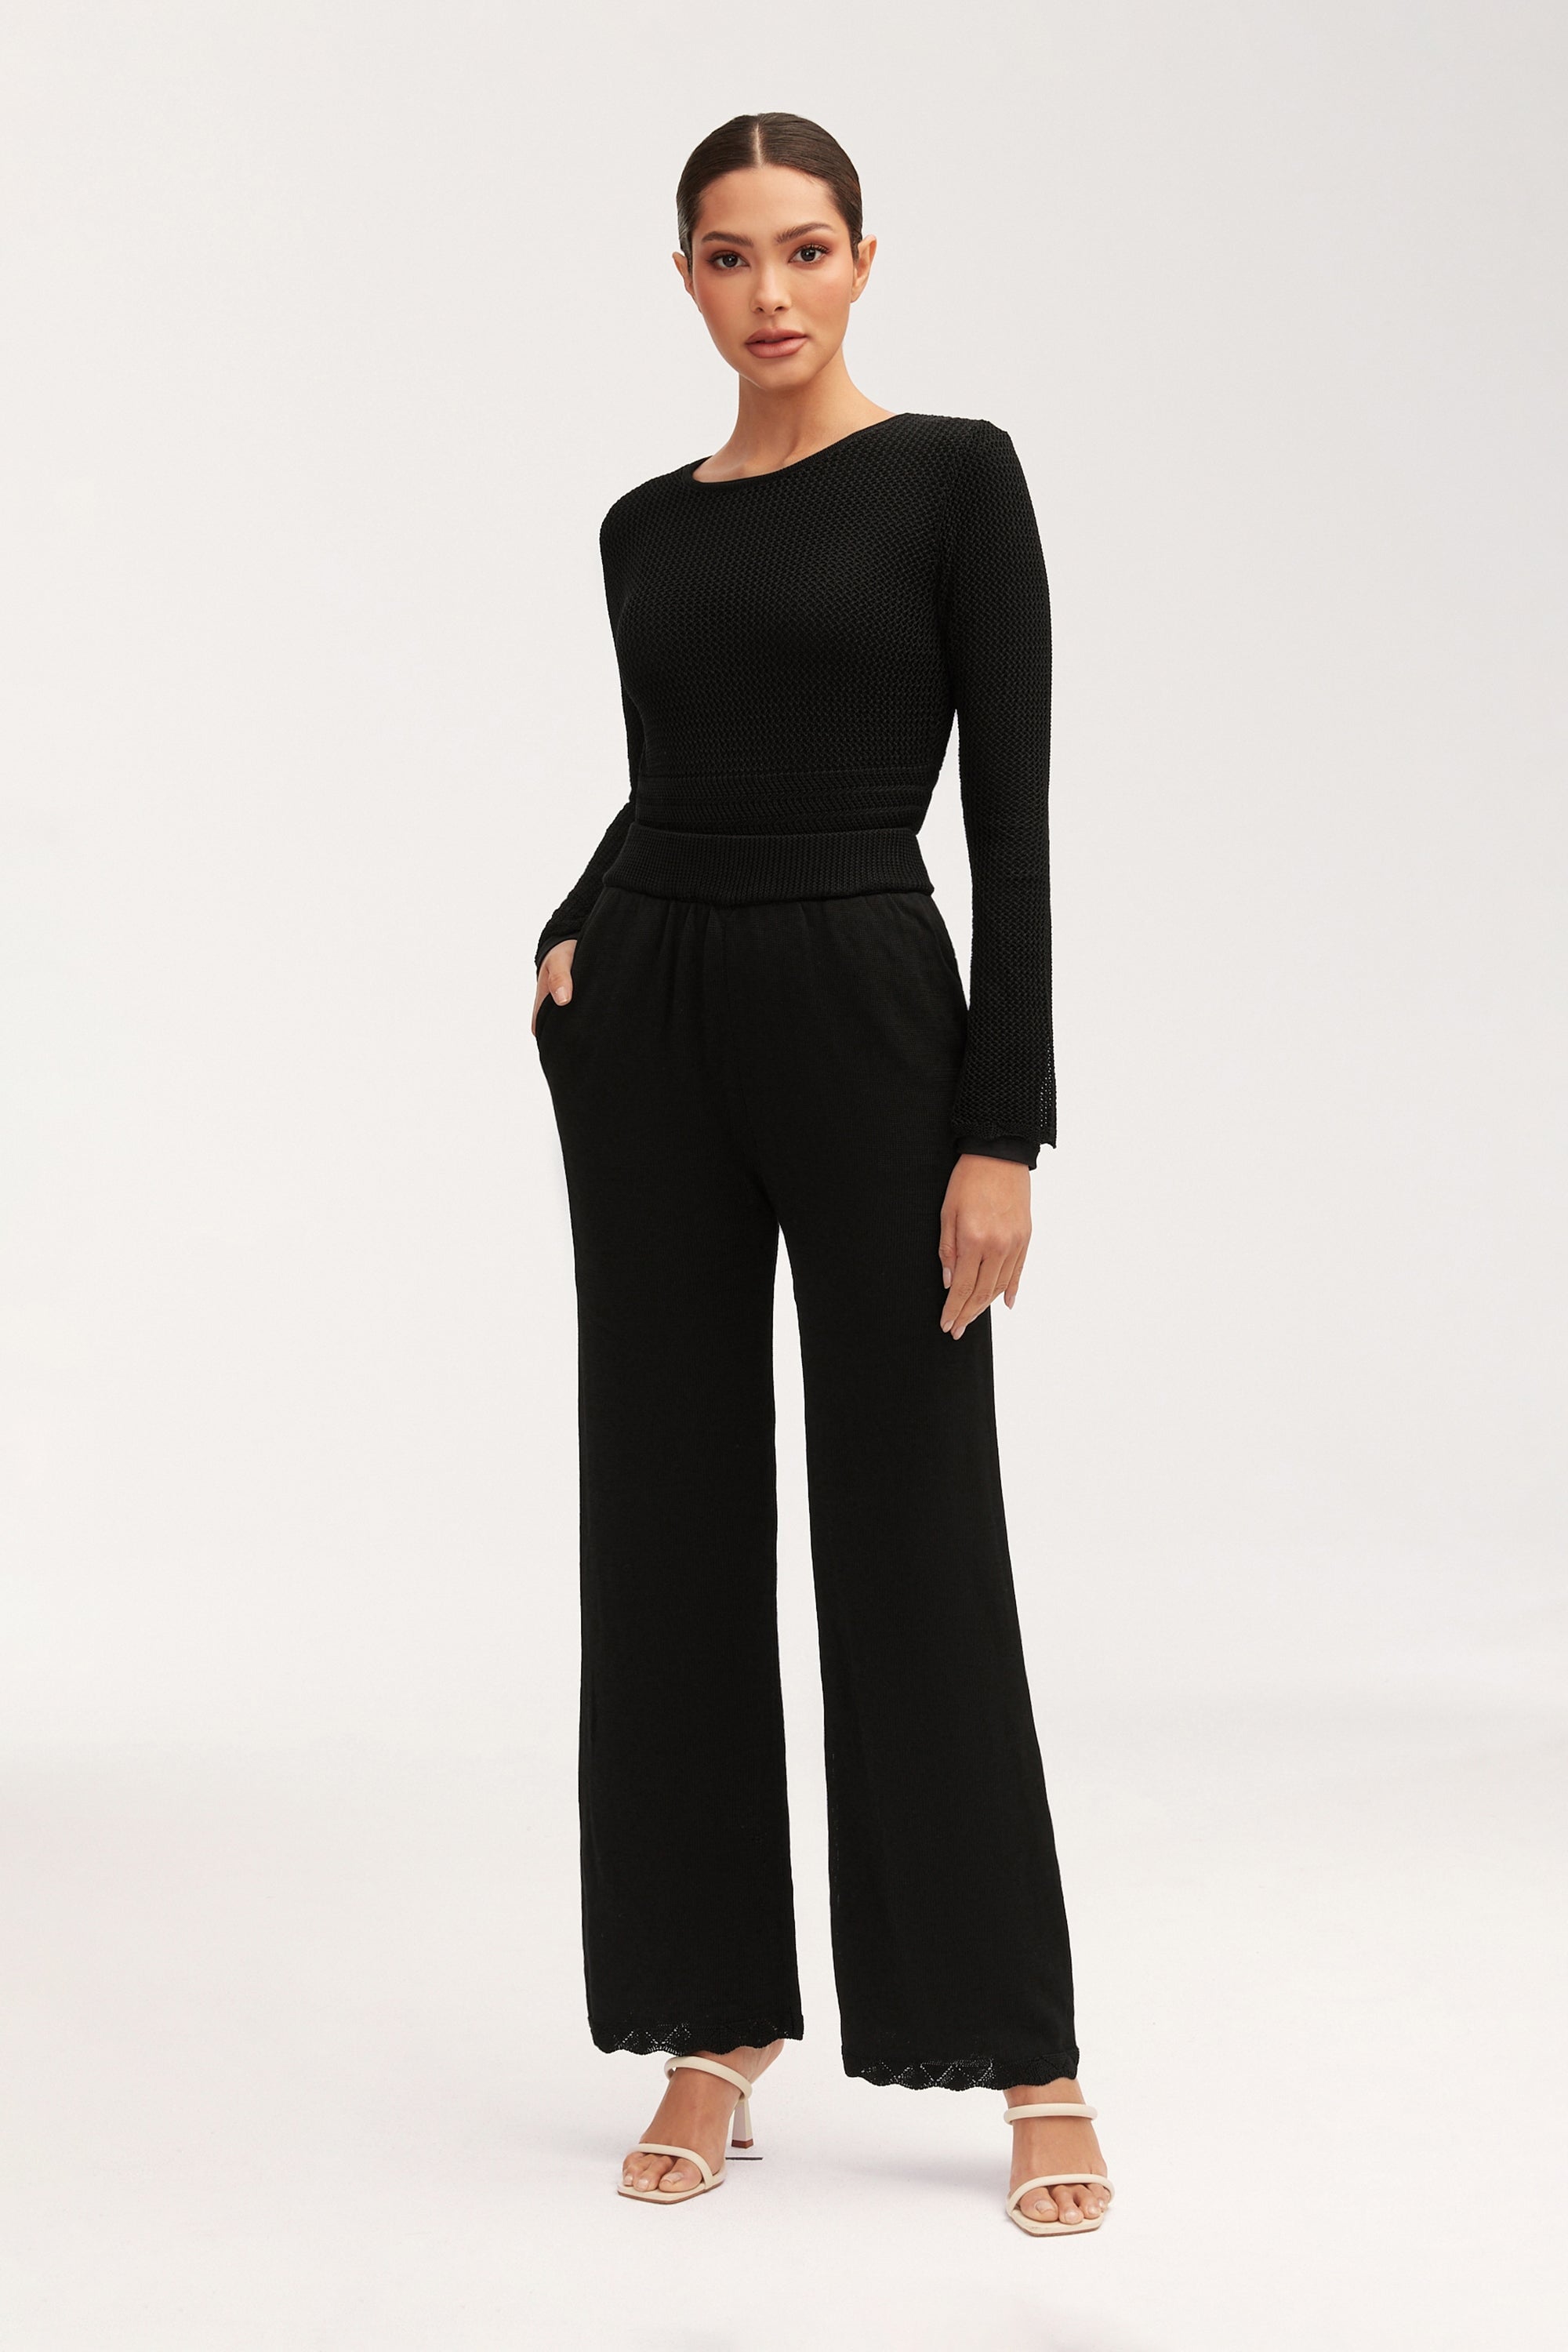 Kendall Crochet Top - Black Clothing Veiled 